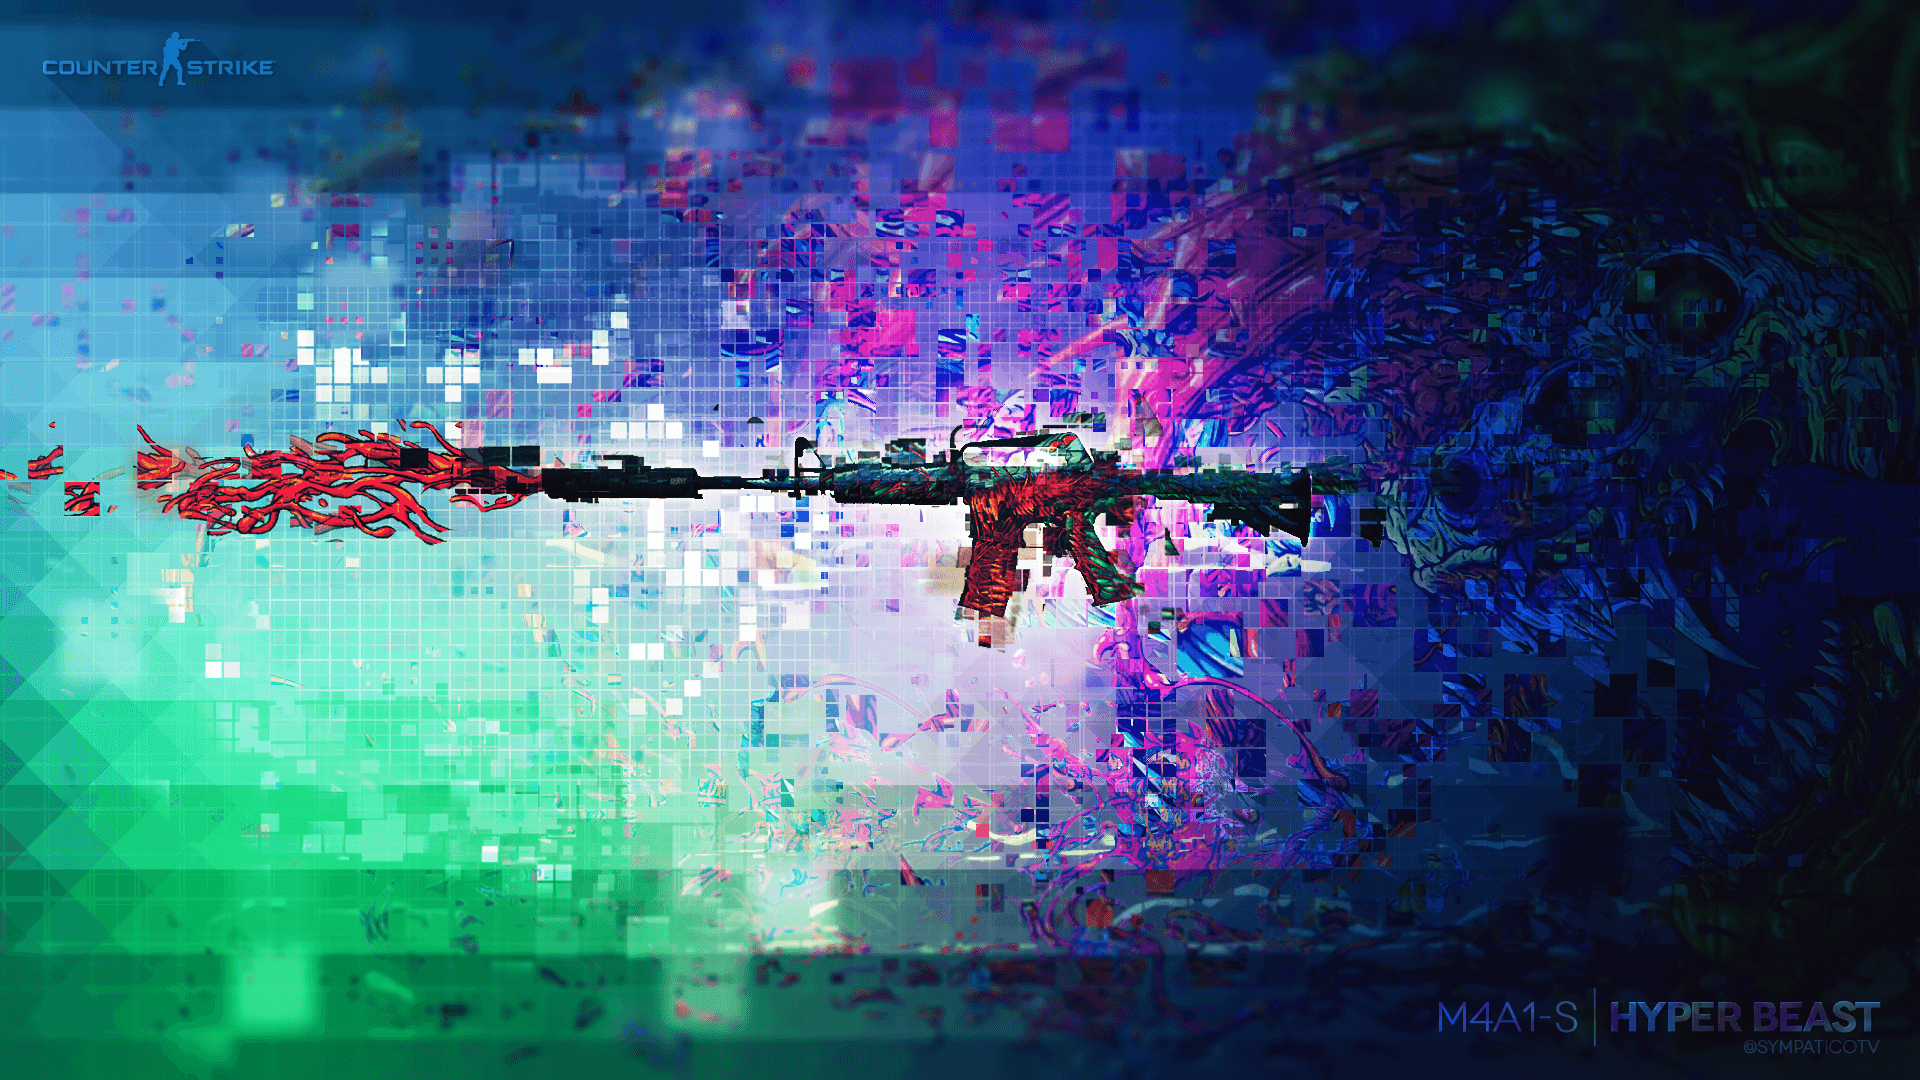 M4A1 S Hyperbeast. CS:GO Wallpaper And Background